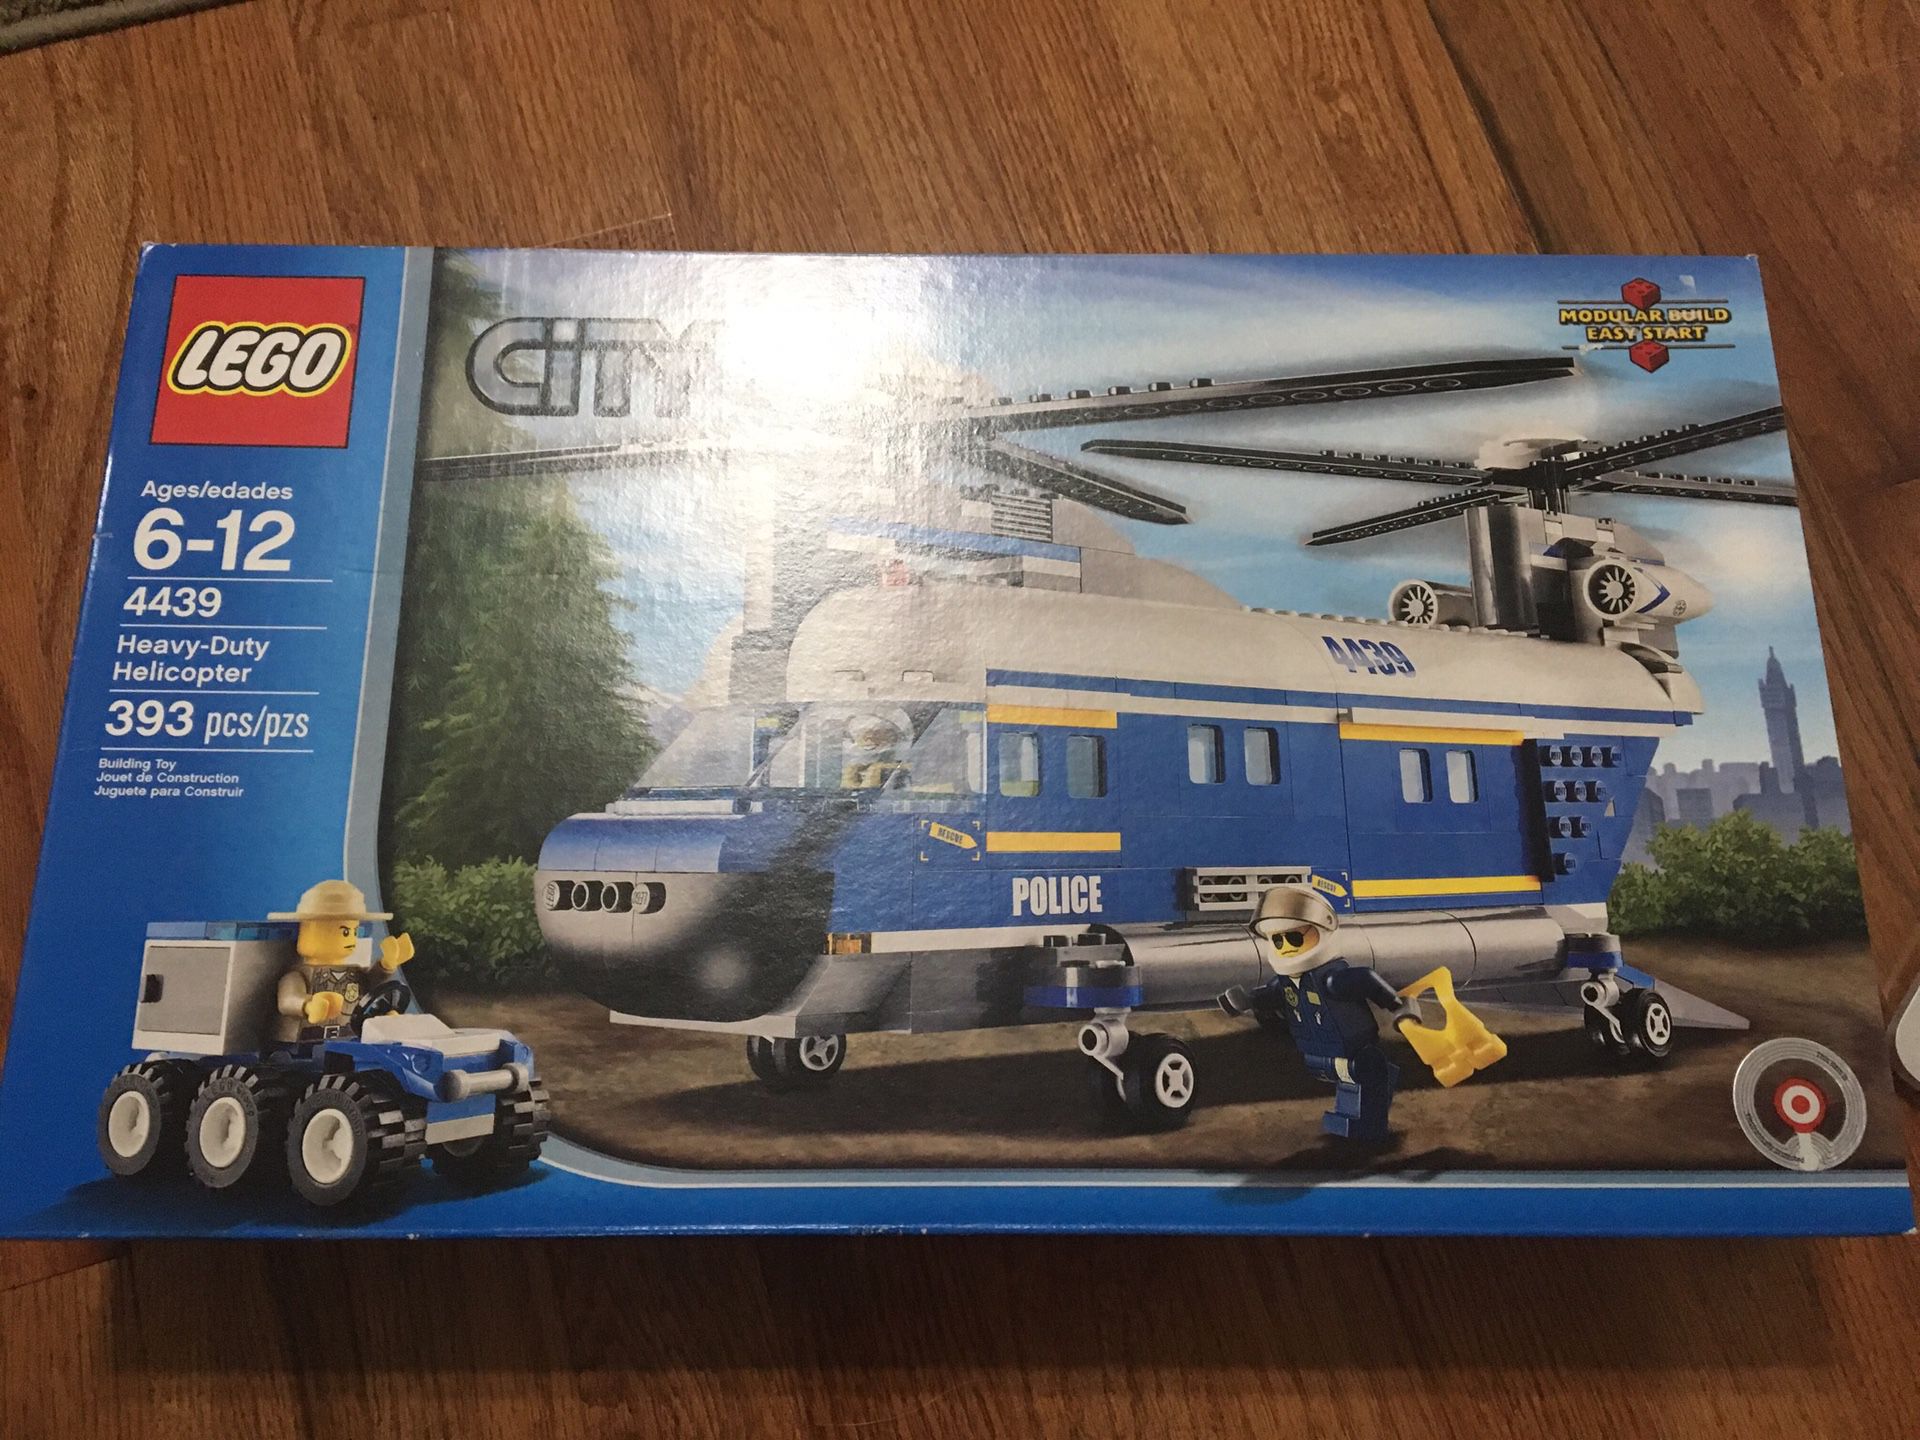 Lego 4439 City heavy-duty Helicopter